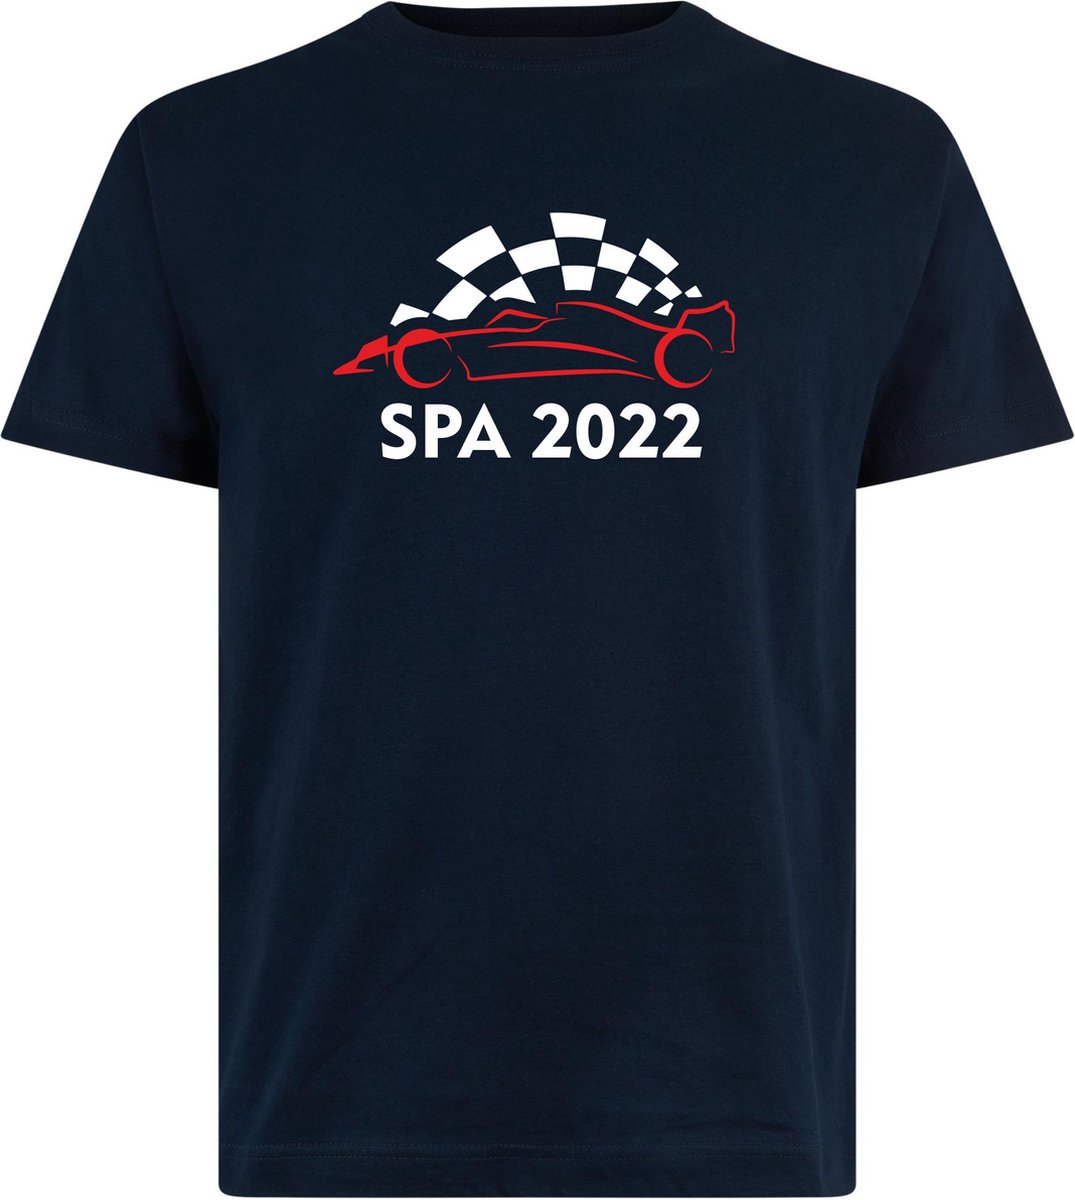 T-shirt kinderen Spa 2022 met raceauto | Max Verstappen / Red Bull Racing / Formule 1 fan | Grand Prix Circuit Spa-Francorchamps | kleding shirt | Navy | maat 80